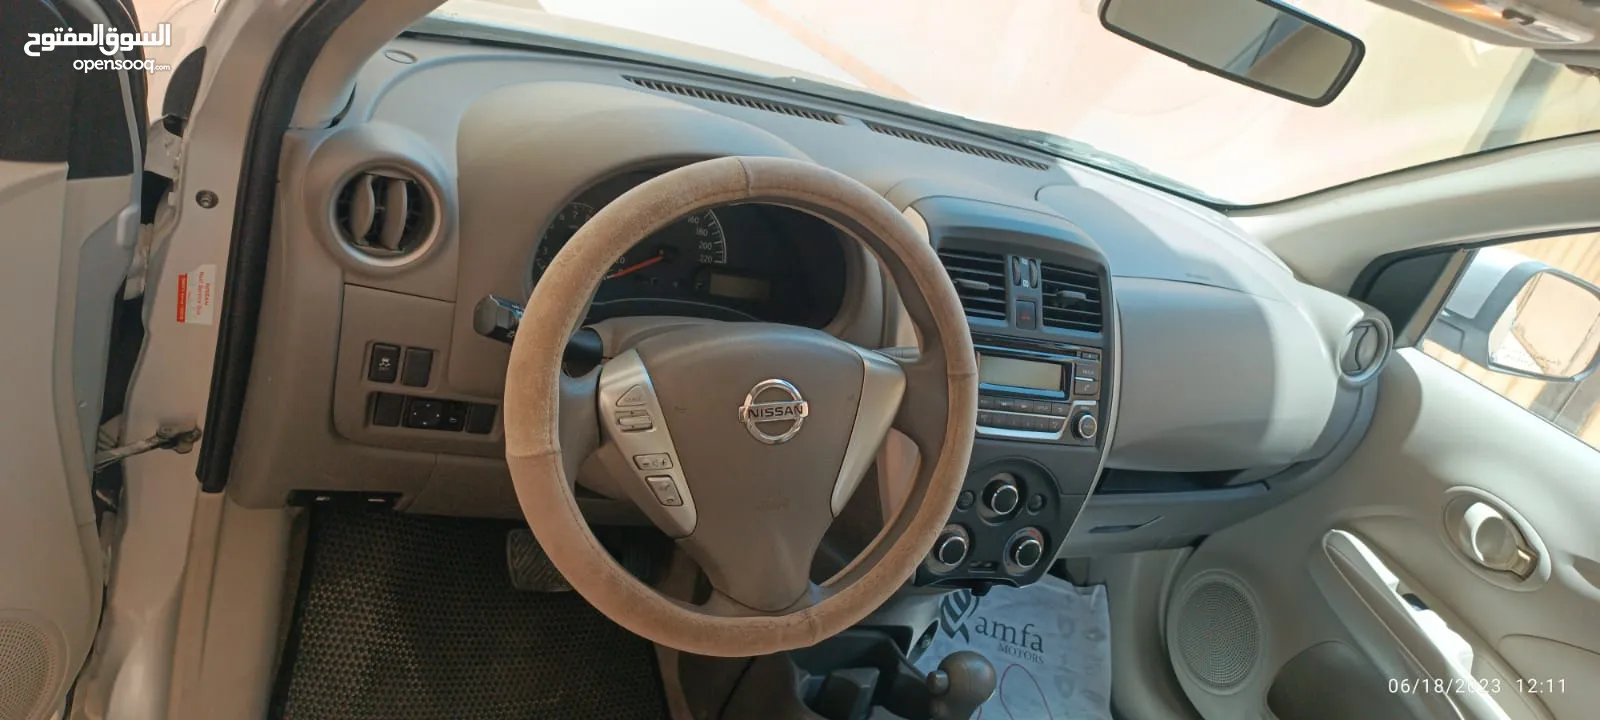 Nissan Sunny 2019 7 Month Pasing Inshurance No Major Accident   Just Wattsapp Contact